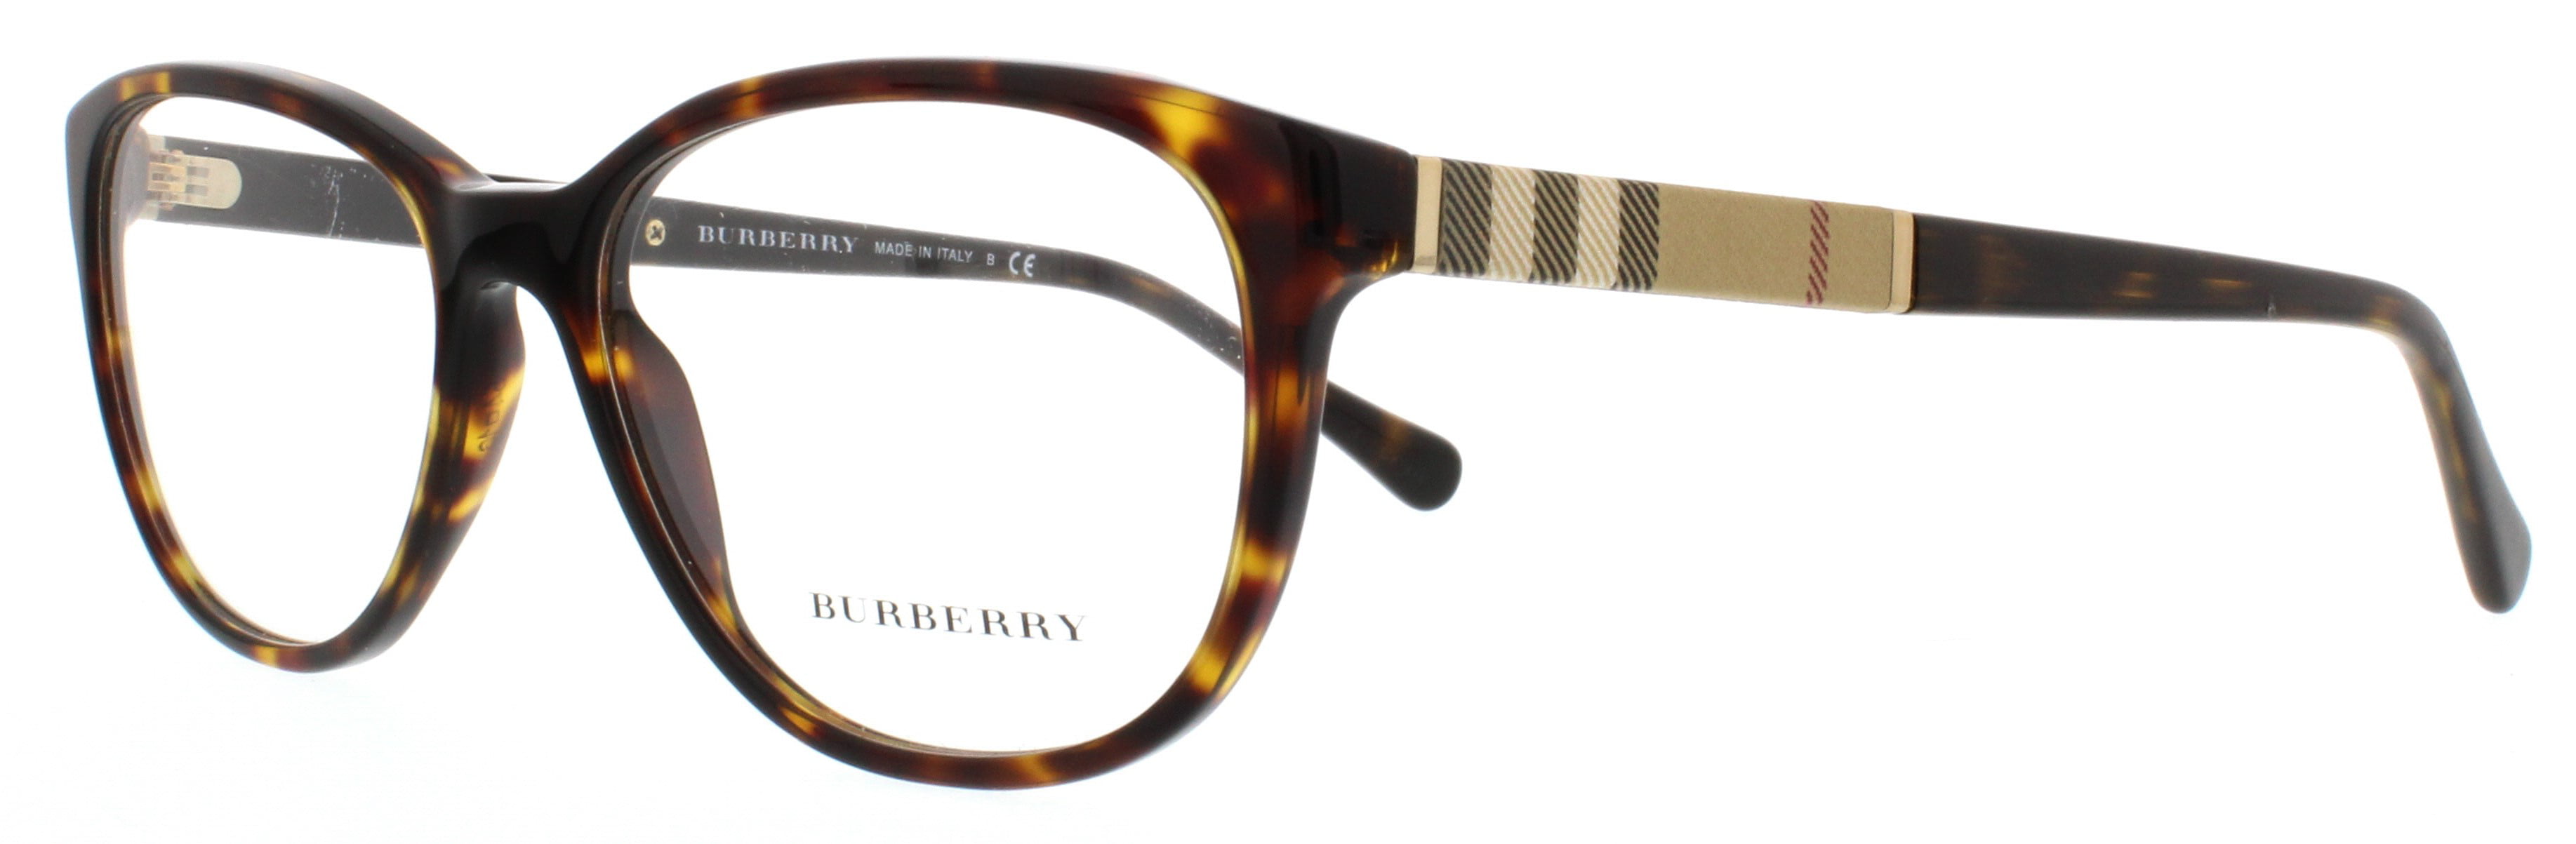 burberry 2172 glasses